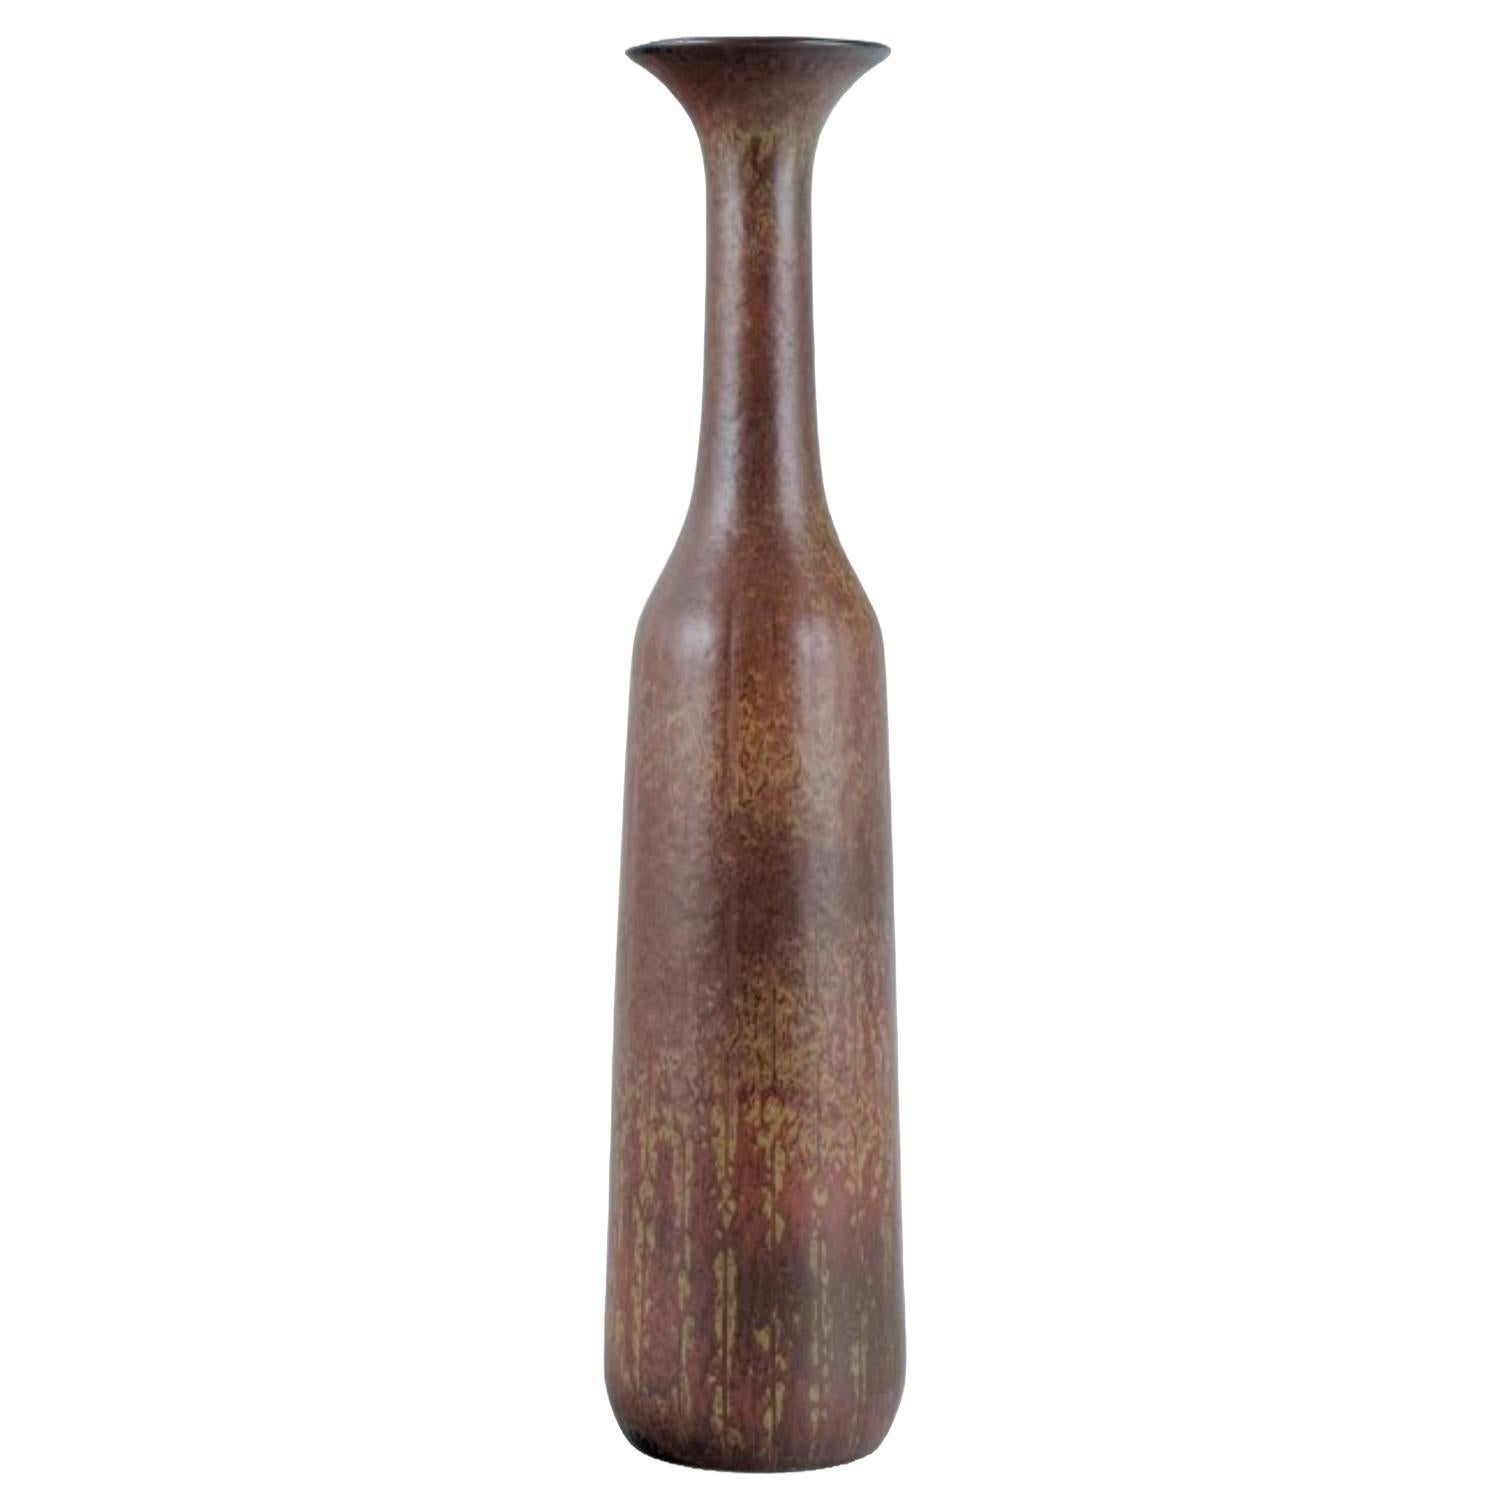 Gunnar Nylund for Rörstrand. Large ceramic vase with brown glaze. For Sale